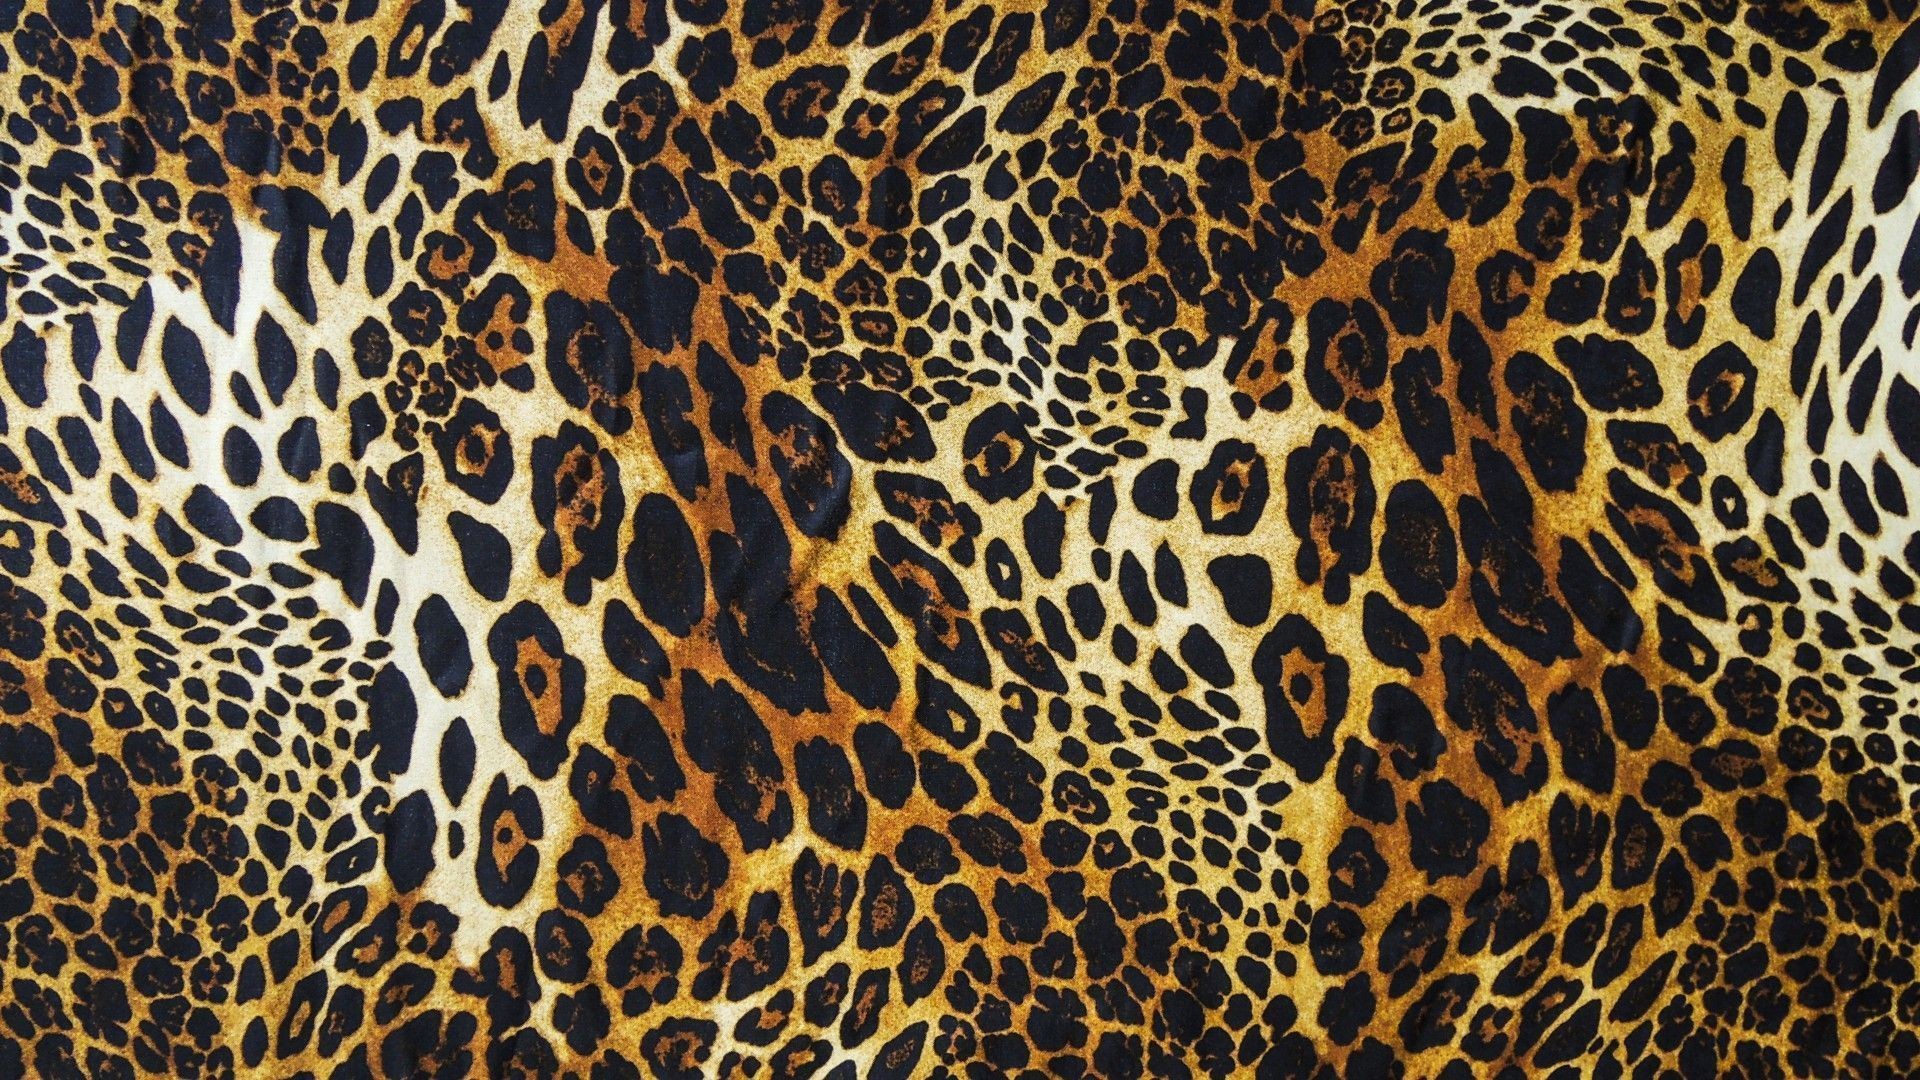 1920x1080 Pink leopard skin wallpaper - photo#27